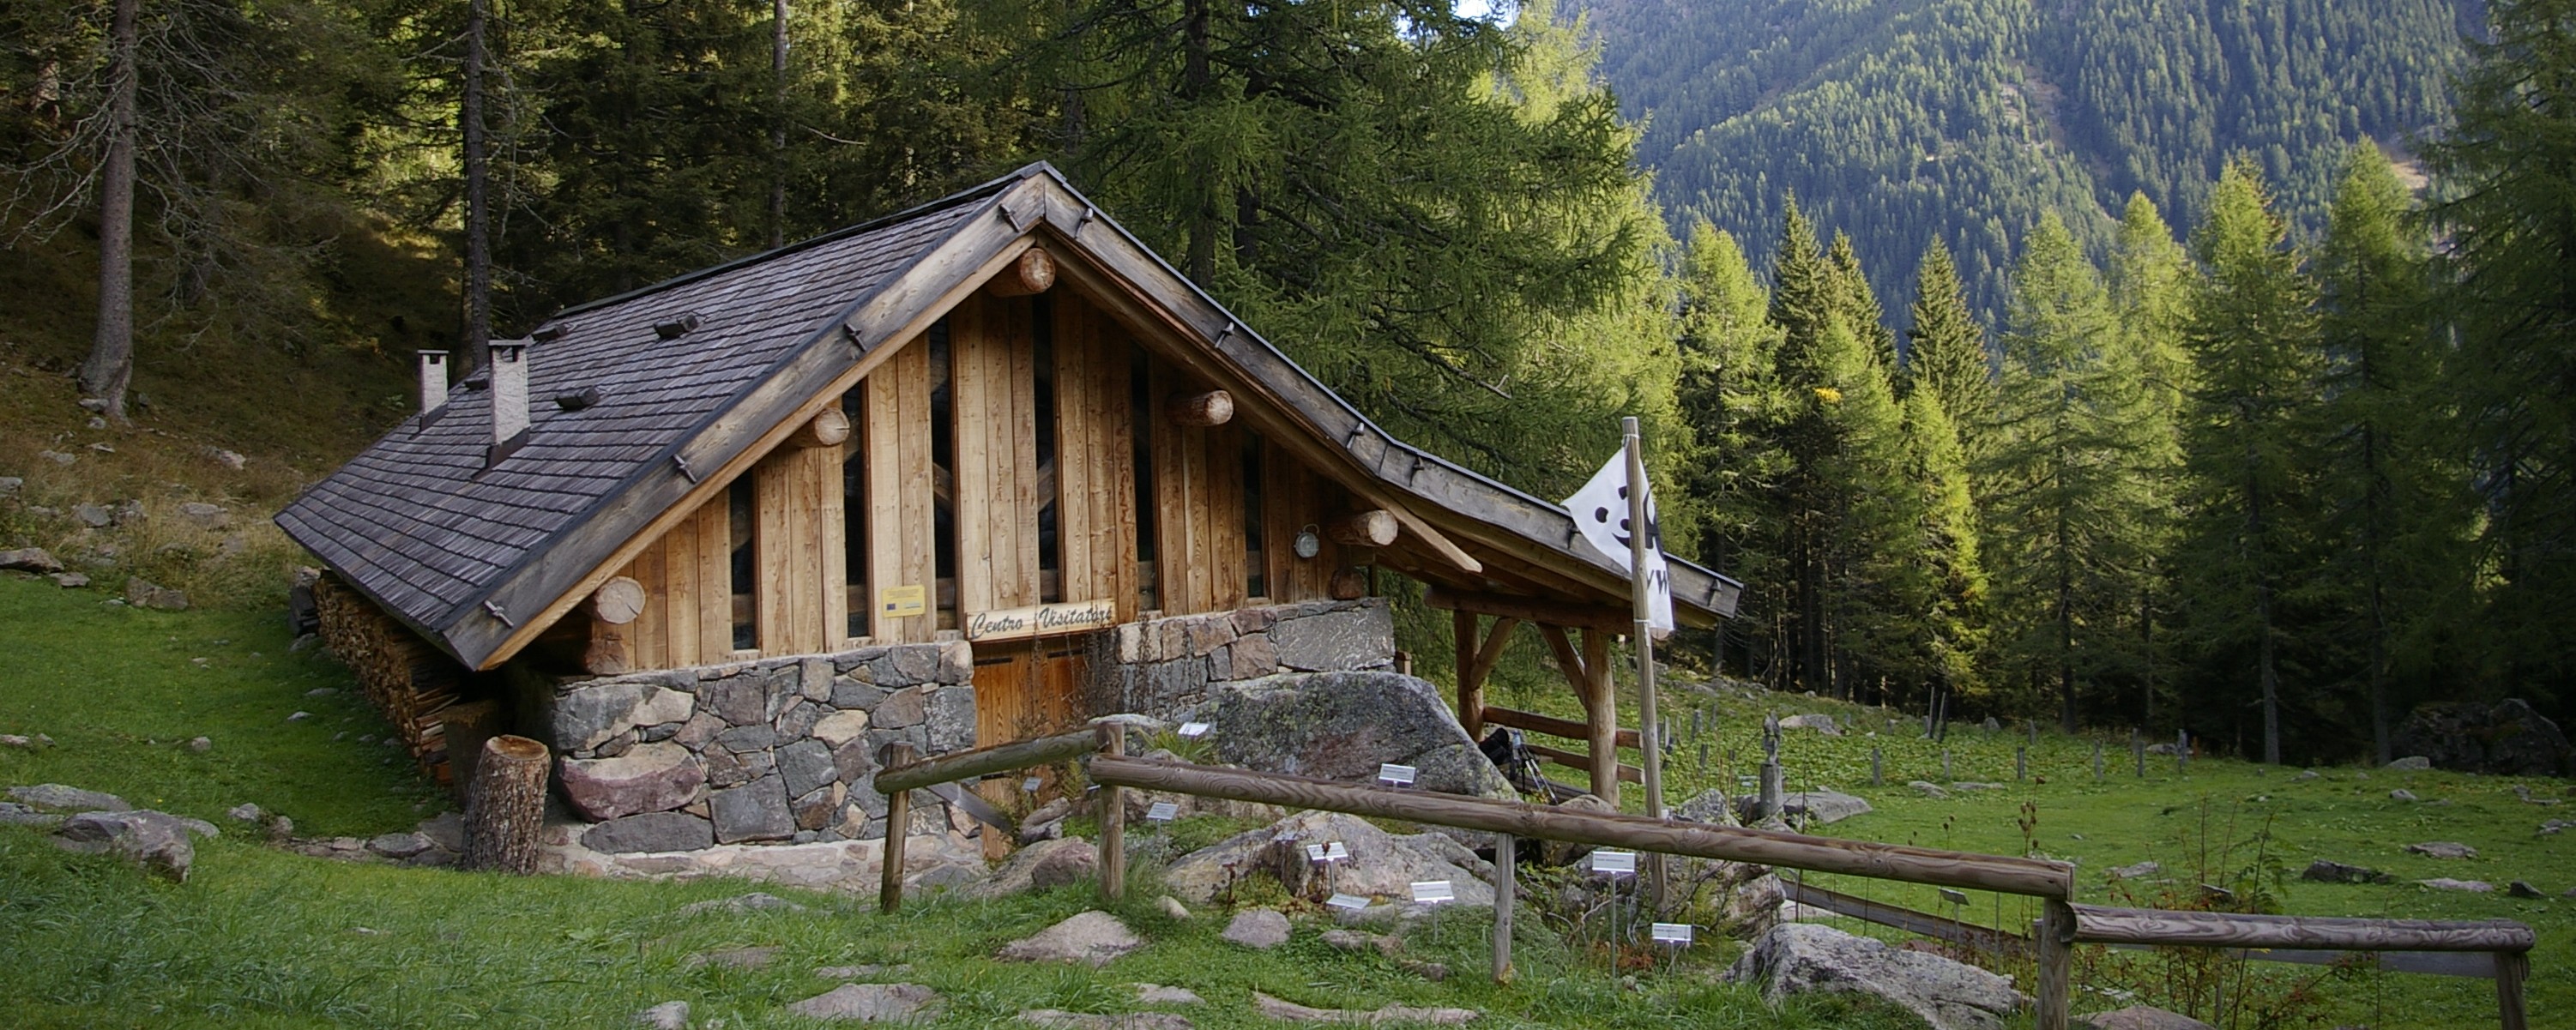 Valtrigona WWF Oasis, Trentino